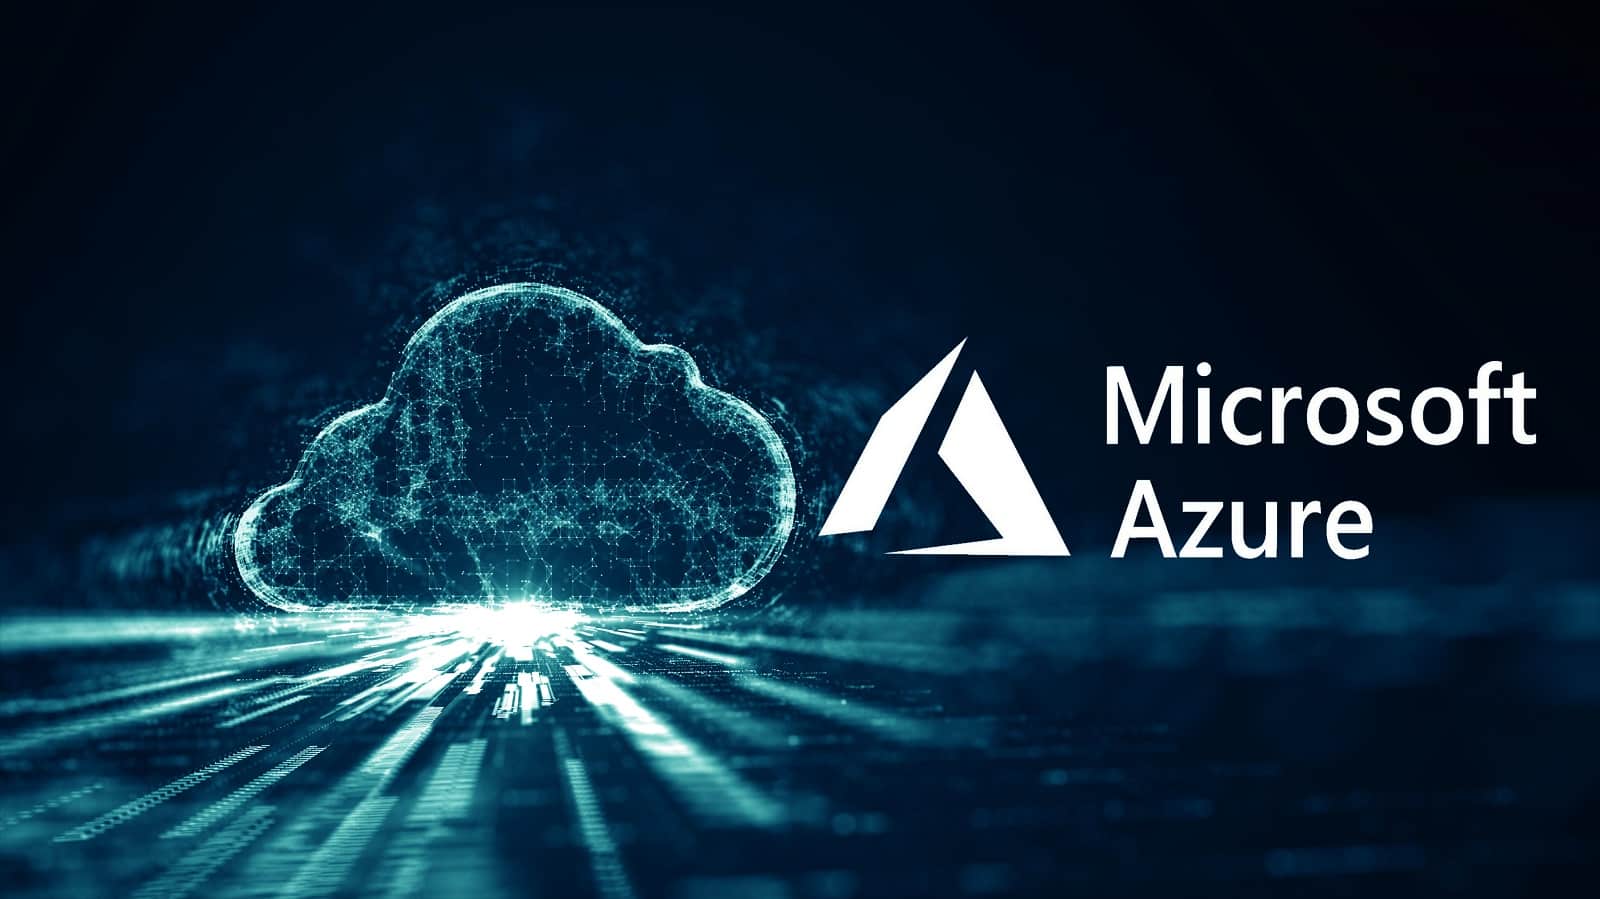 Microsoft Azure Cloud Services Image